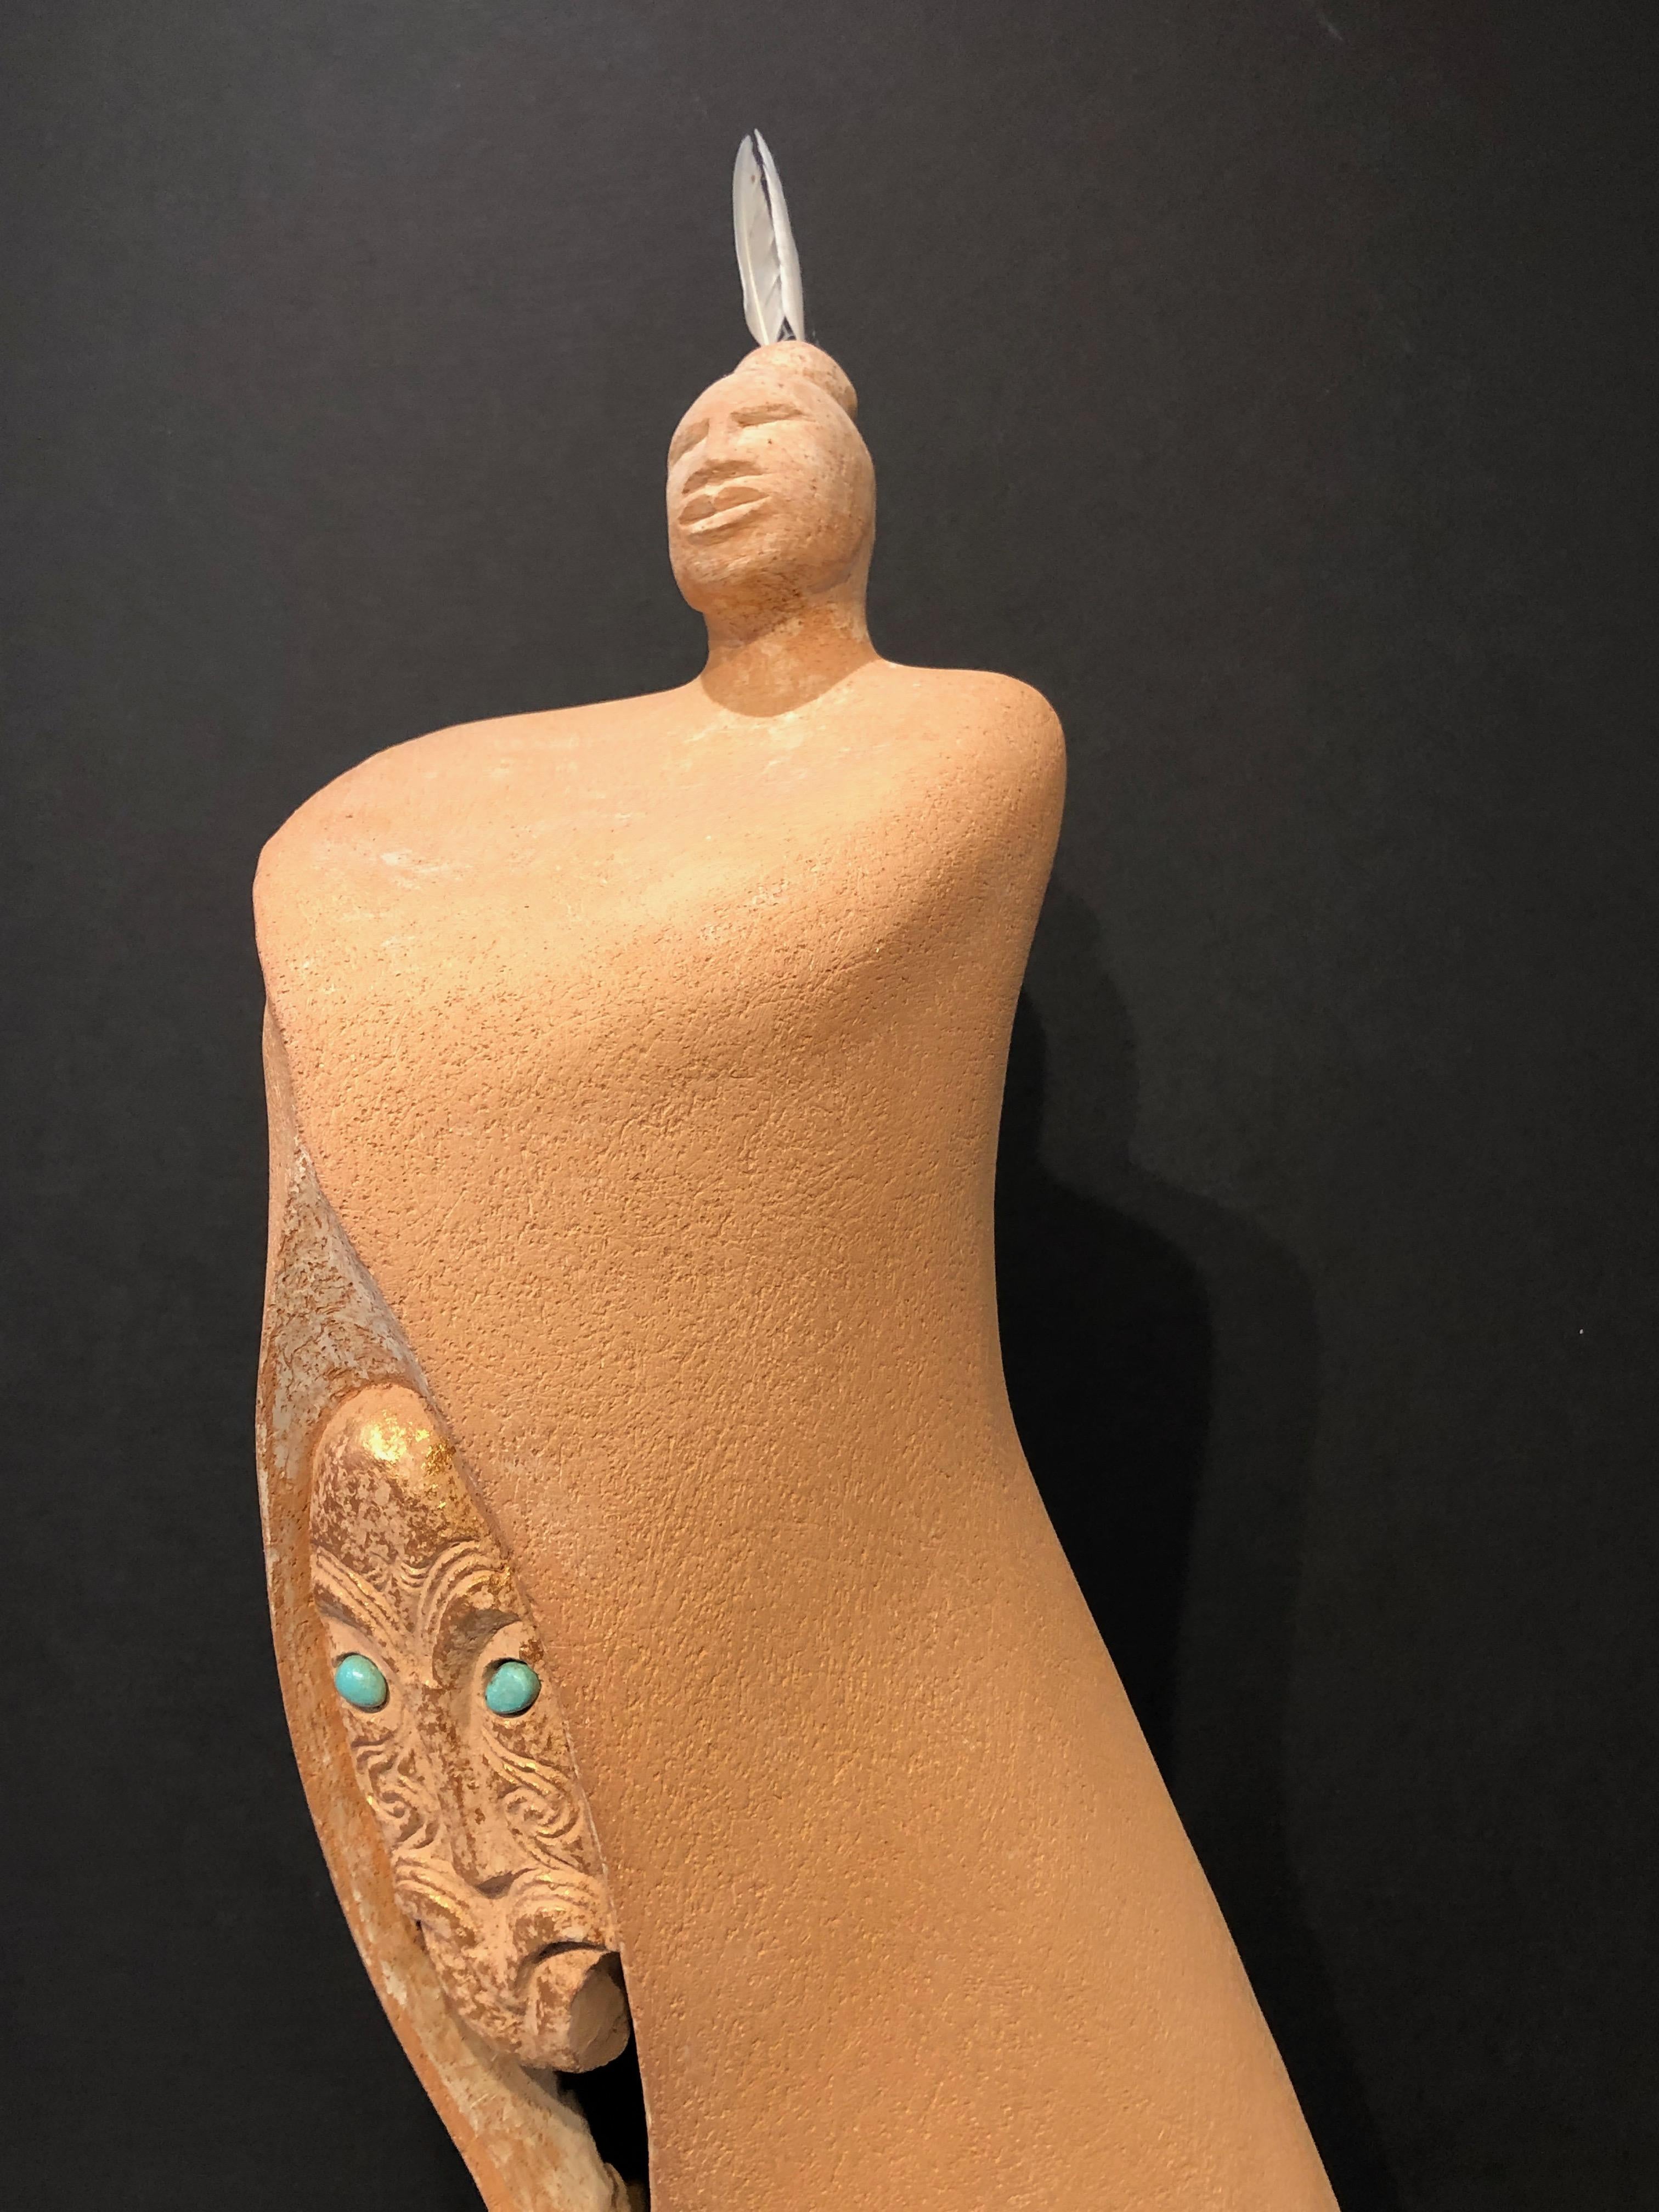 Waiata, Song, ceramic sculpture, Maori art, contemporary cloaked male figure - Sculpture by Noelle Jakeman